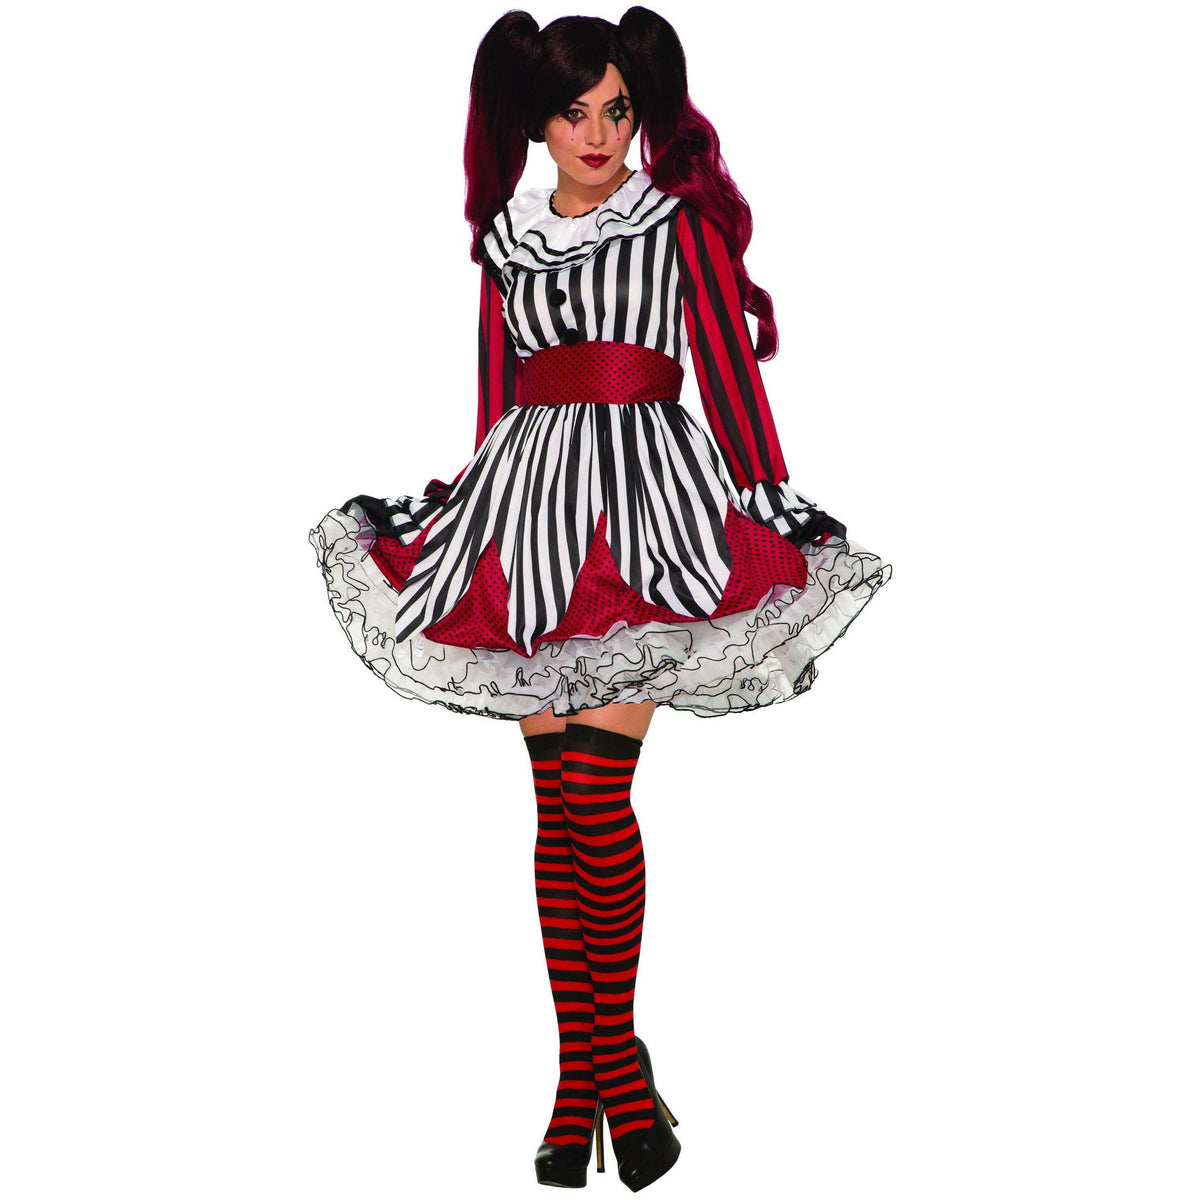 Miss Mischief the Clown Adult Costume